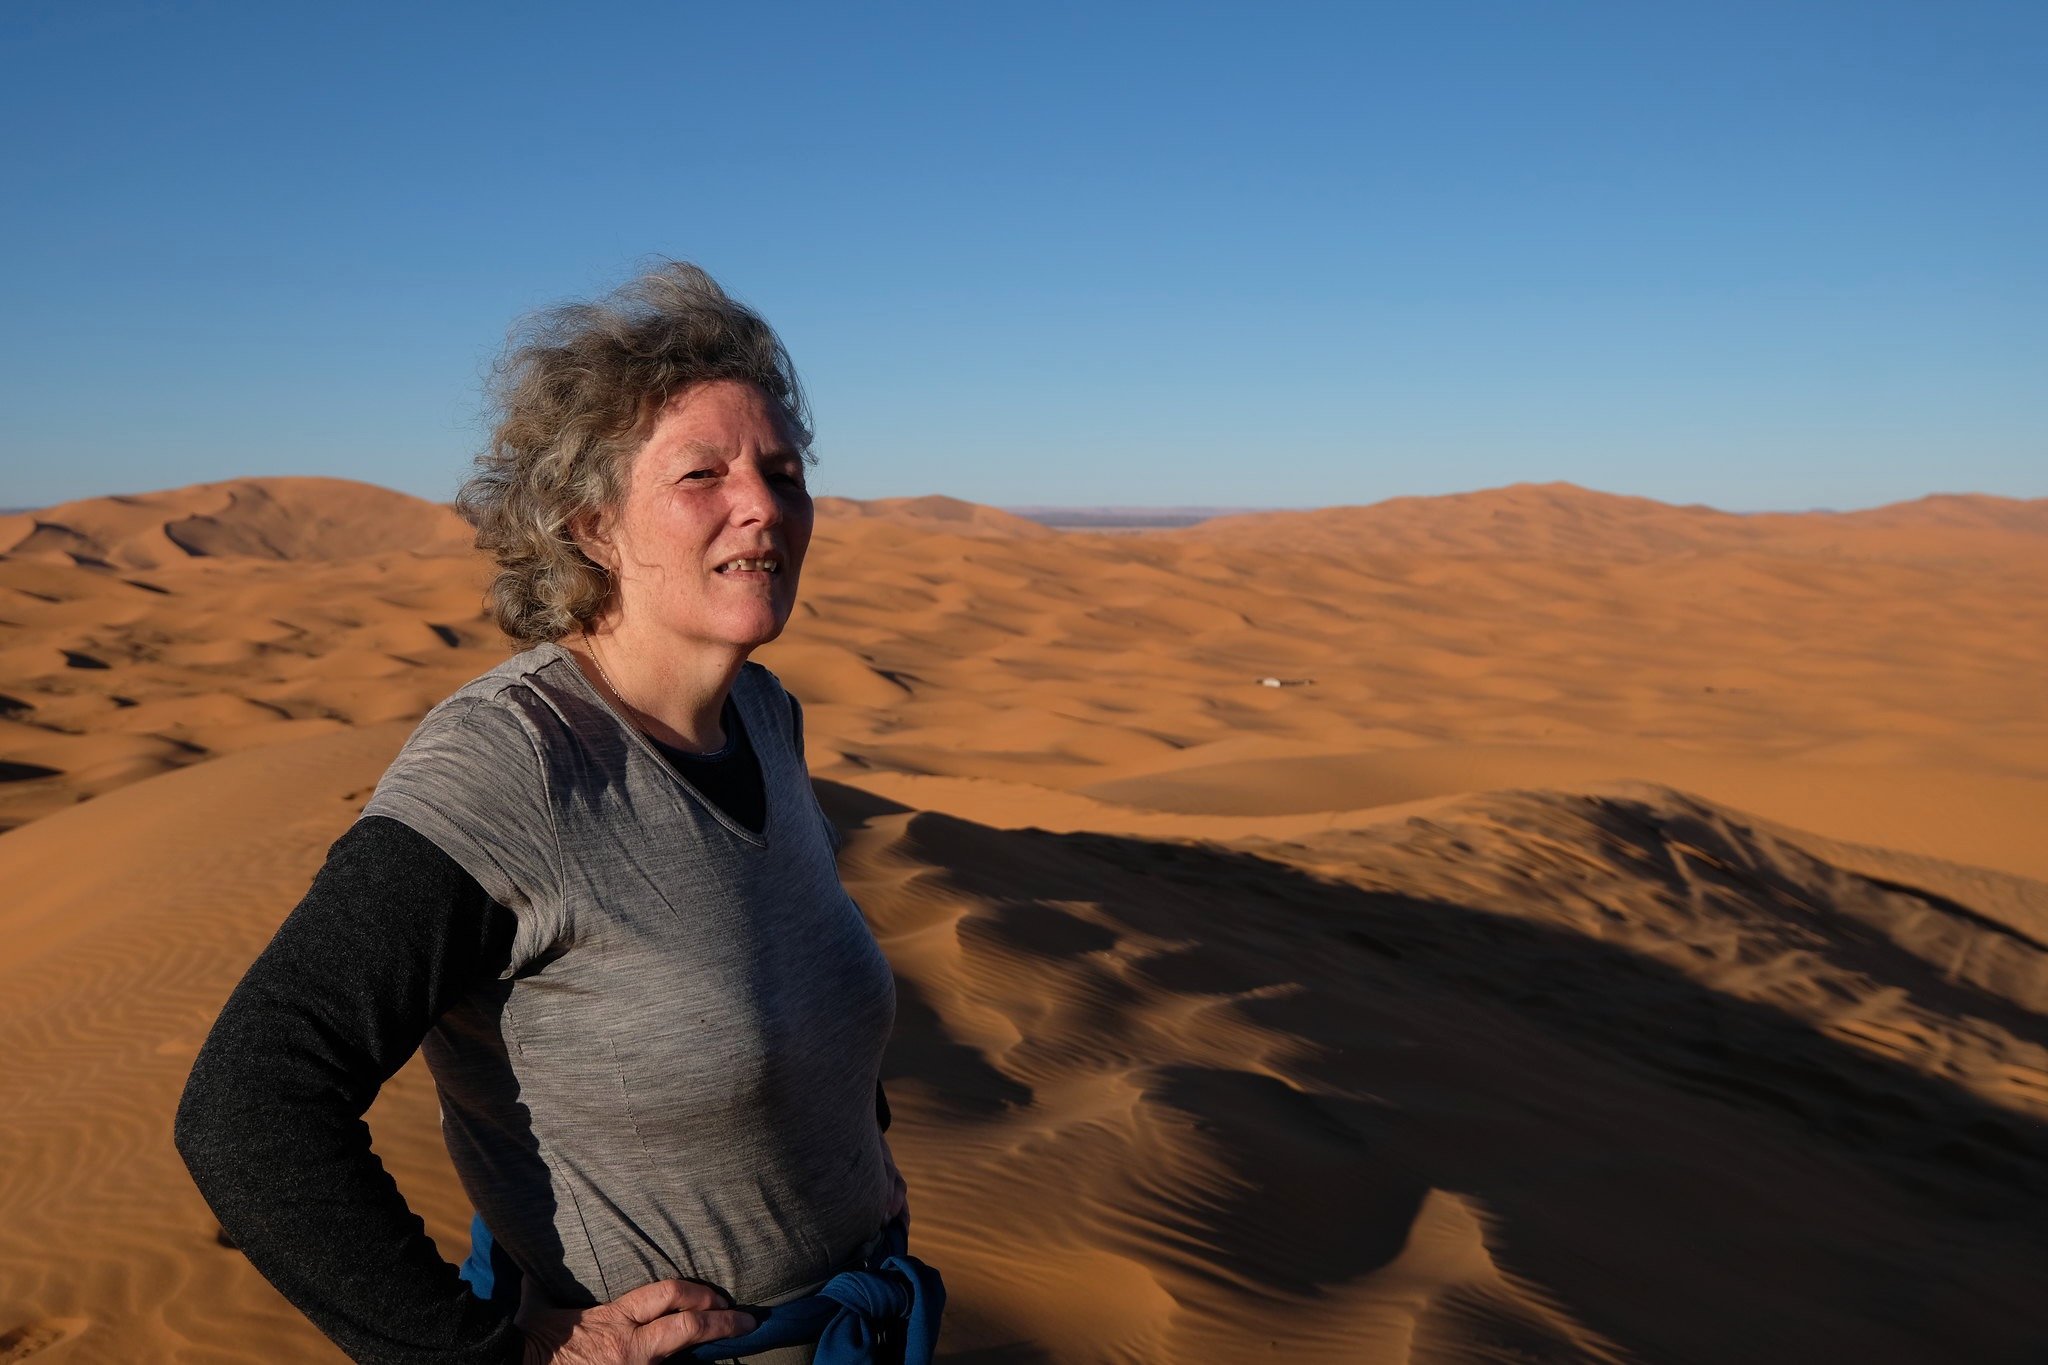  Katrina atop a monster sand dune in Morocco. 